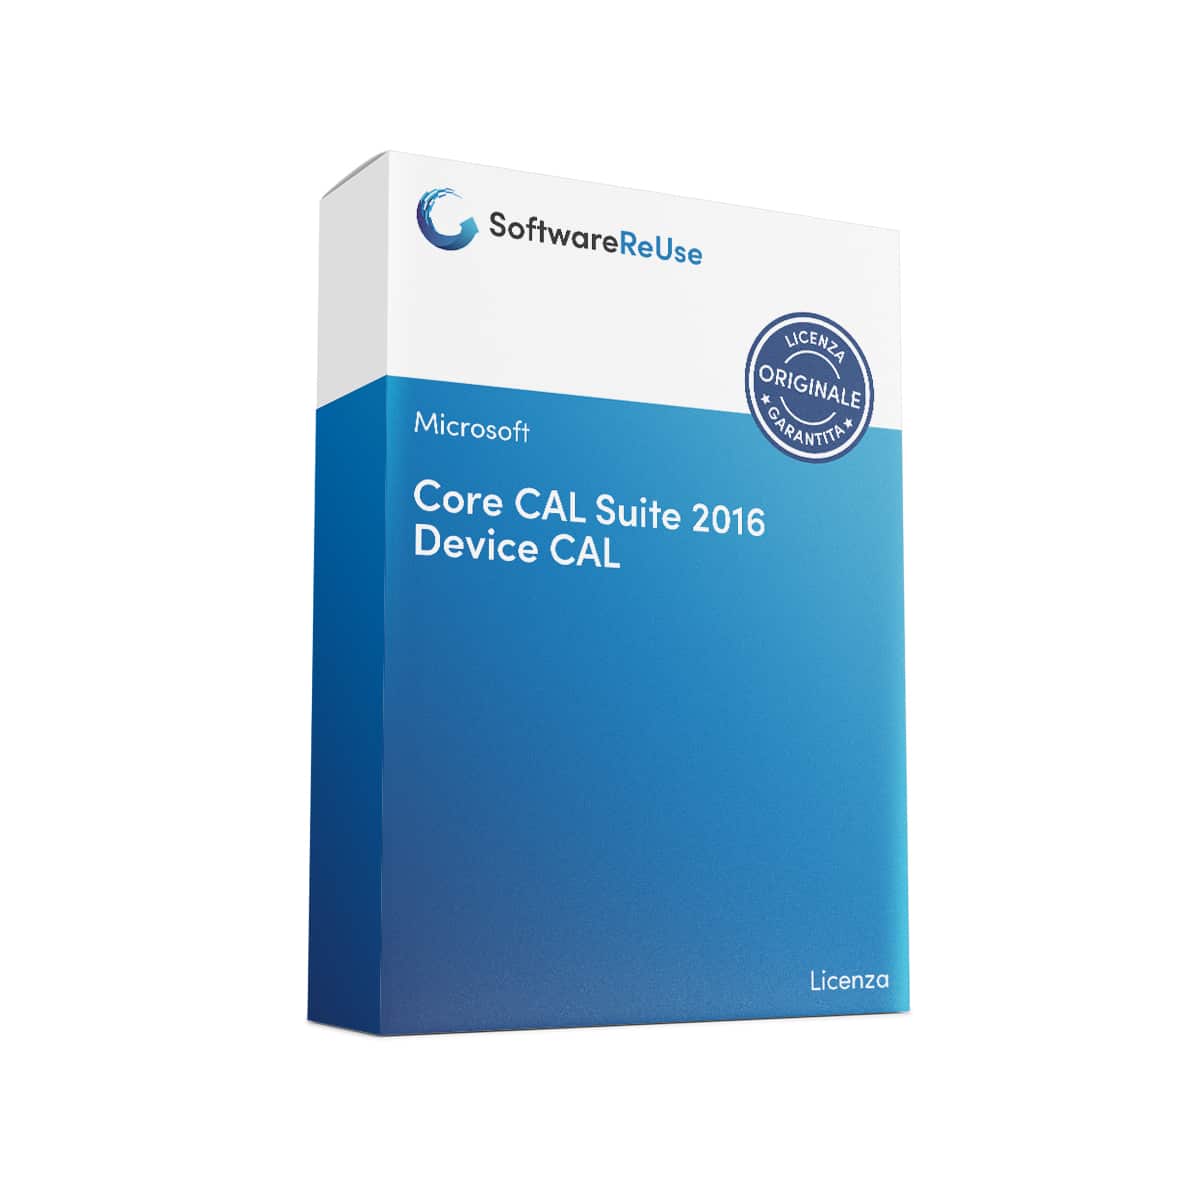 Core CAL Suite 2016 Device CAL IT